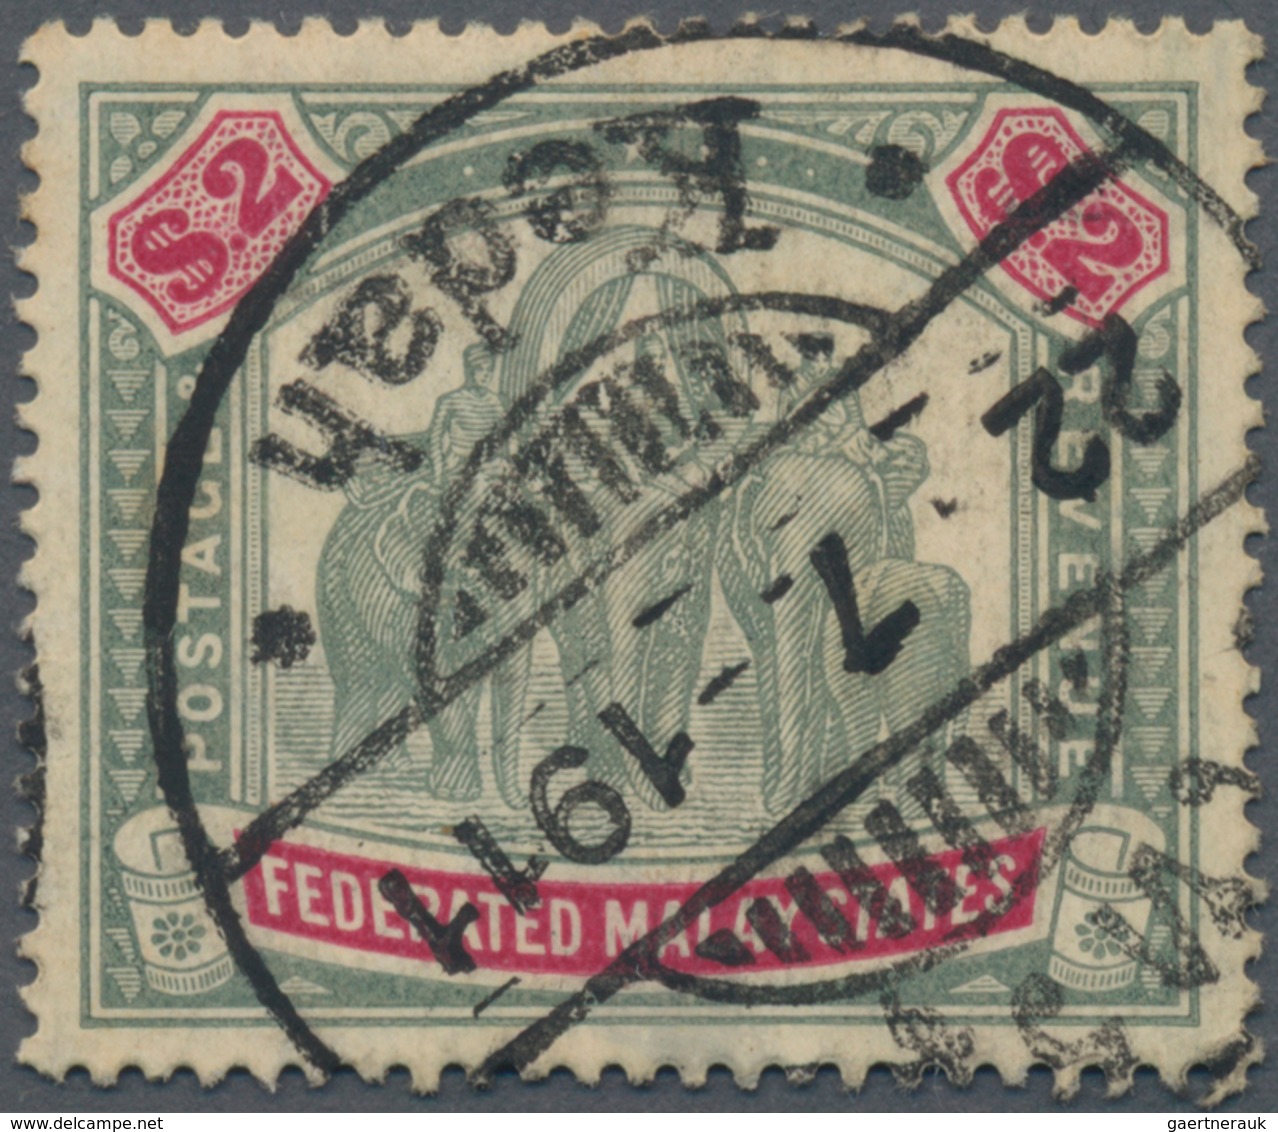 Malaiische Staaten - Kedah: 1909-12 Fed. Malay States $2 Green & Carmine Used In Kedah And Cancelled - Kedah